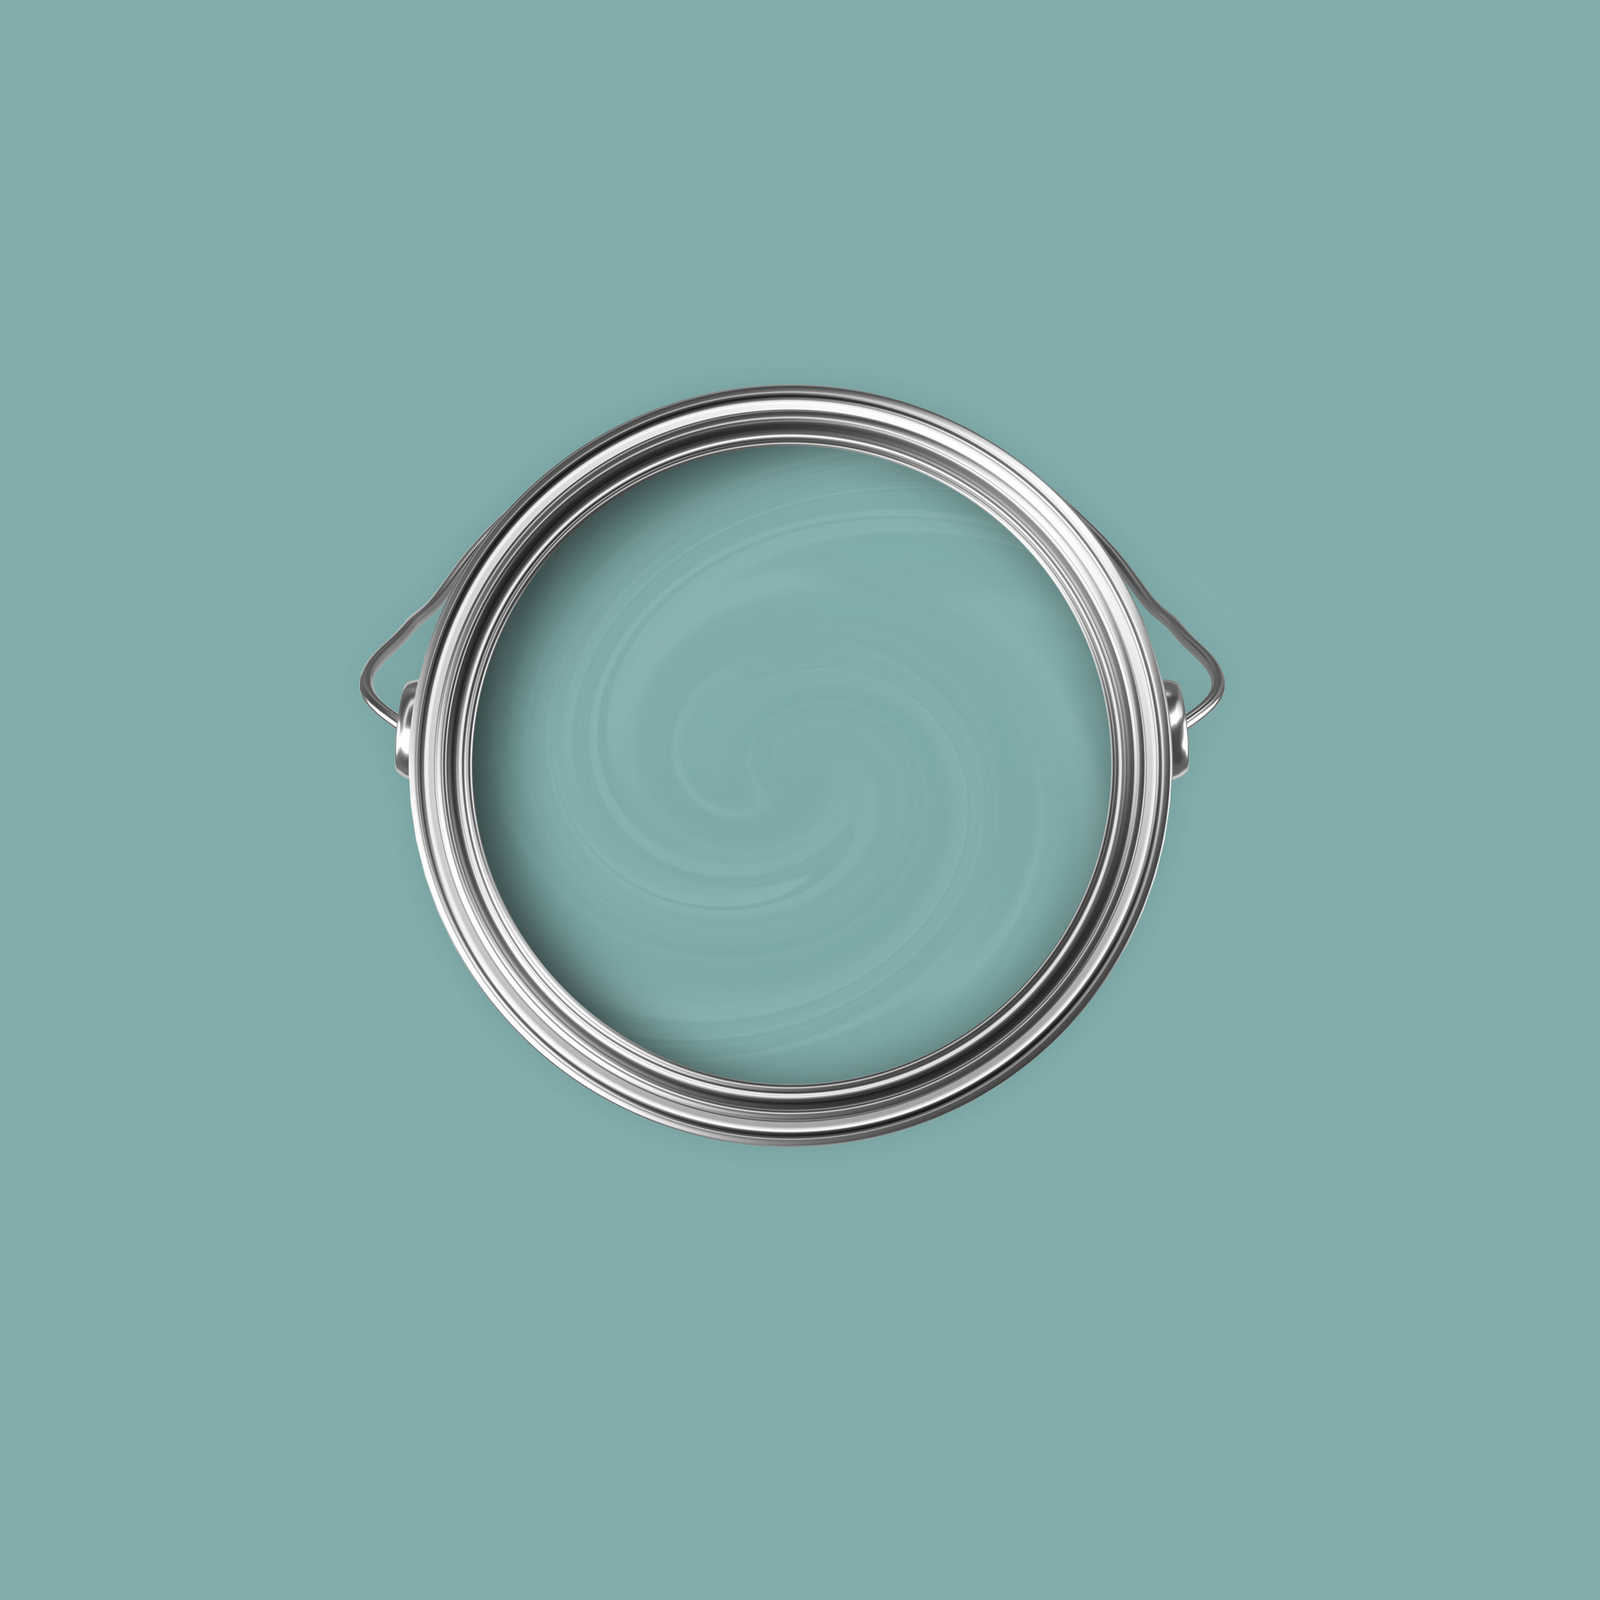             Premium Wall Paint Winging Mint »Expressive Emerald« NW408 – 2.5 litre
        